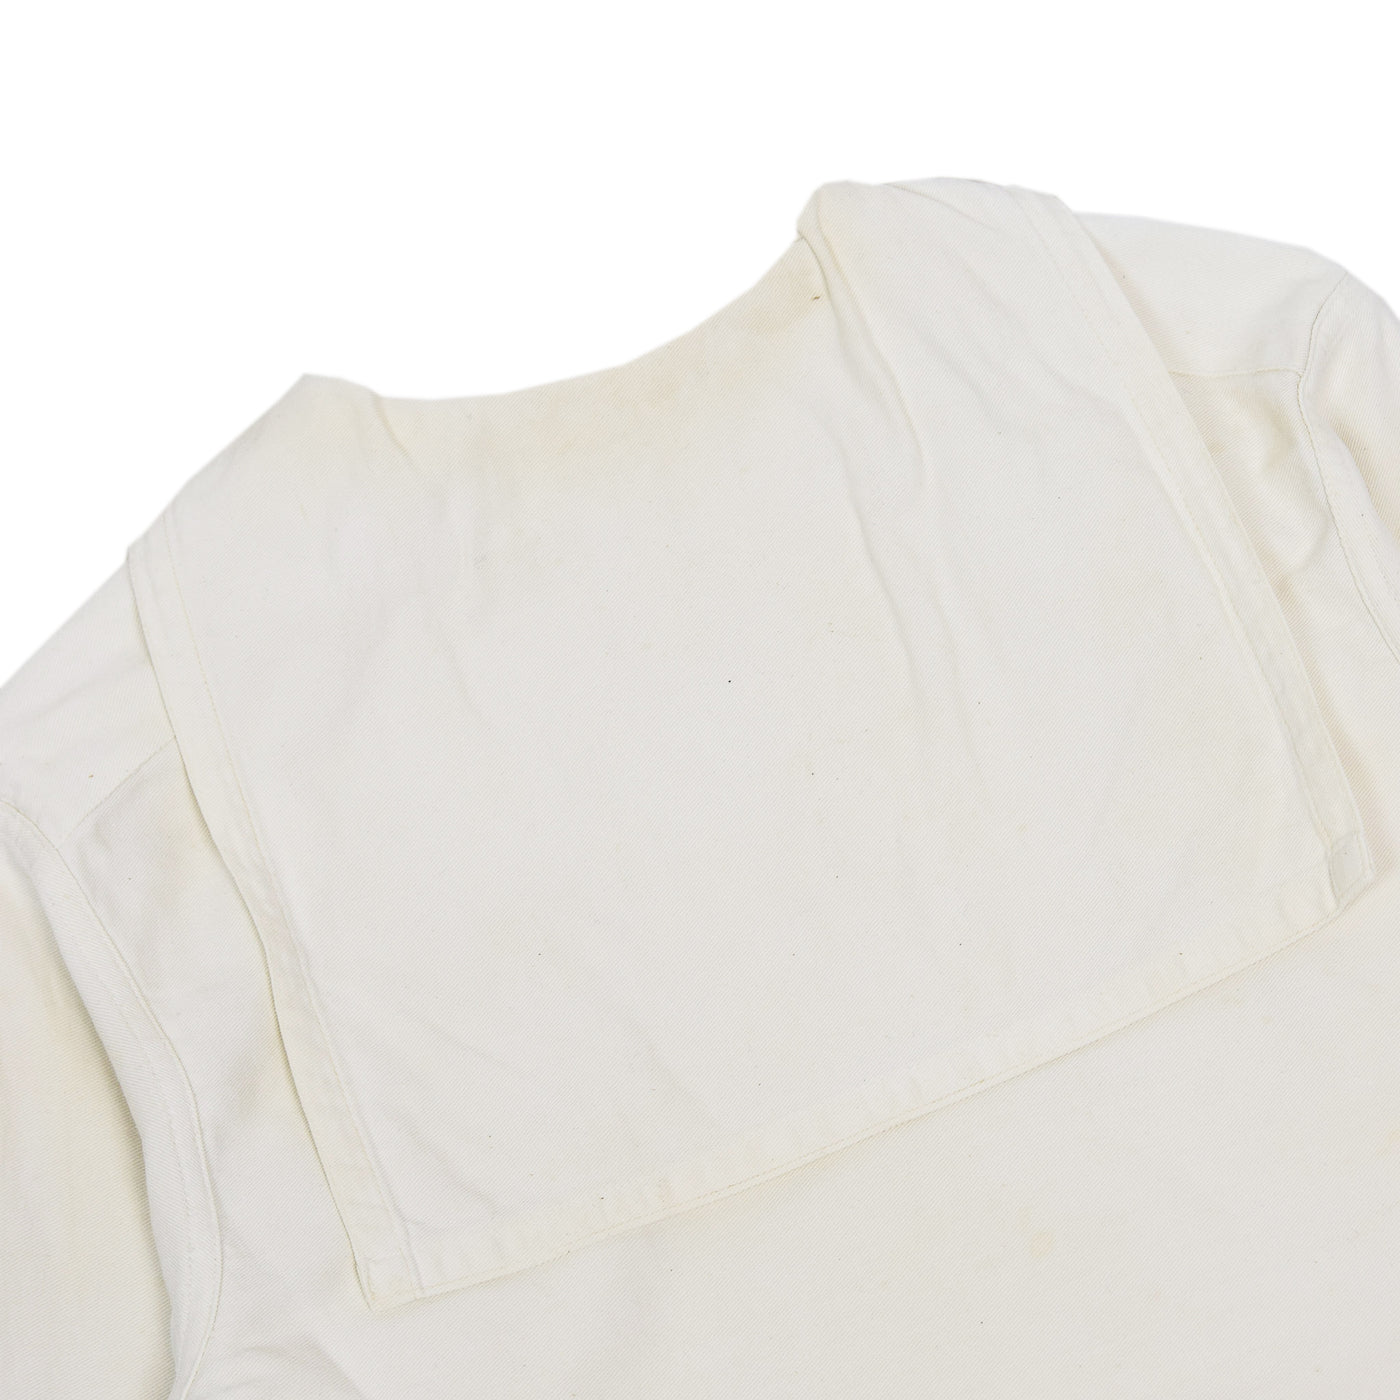 Vintage WWII US Navy Cracker Jack Military Wool Shirt White XS back detail